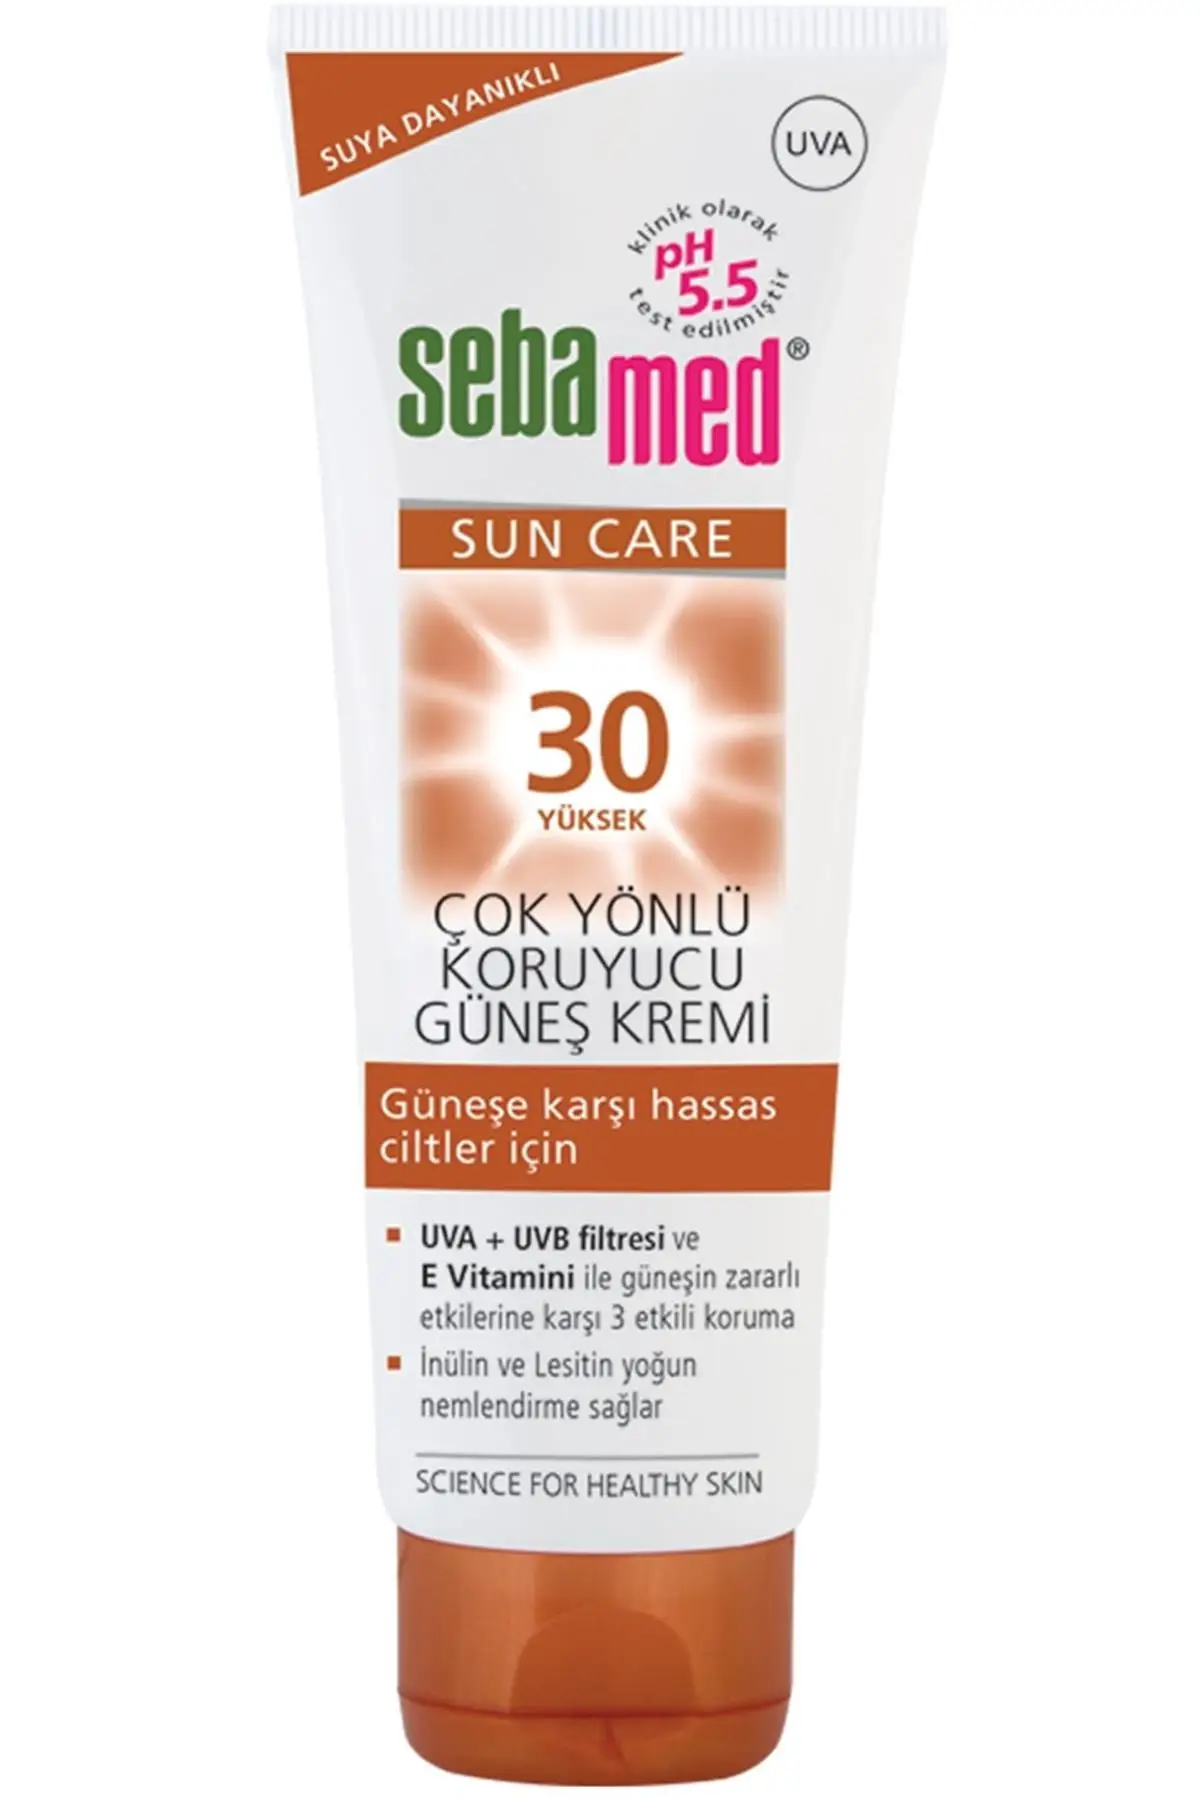 

Бренд: Sebamed Sun Care 30 KF солнцезащитный крем 75 мл Категория: солнцезащитный крем для тела